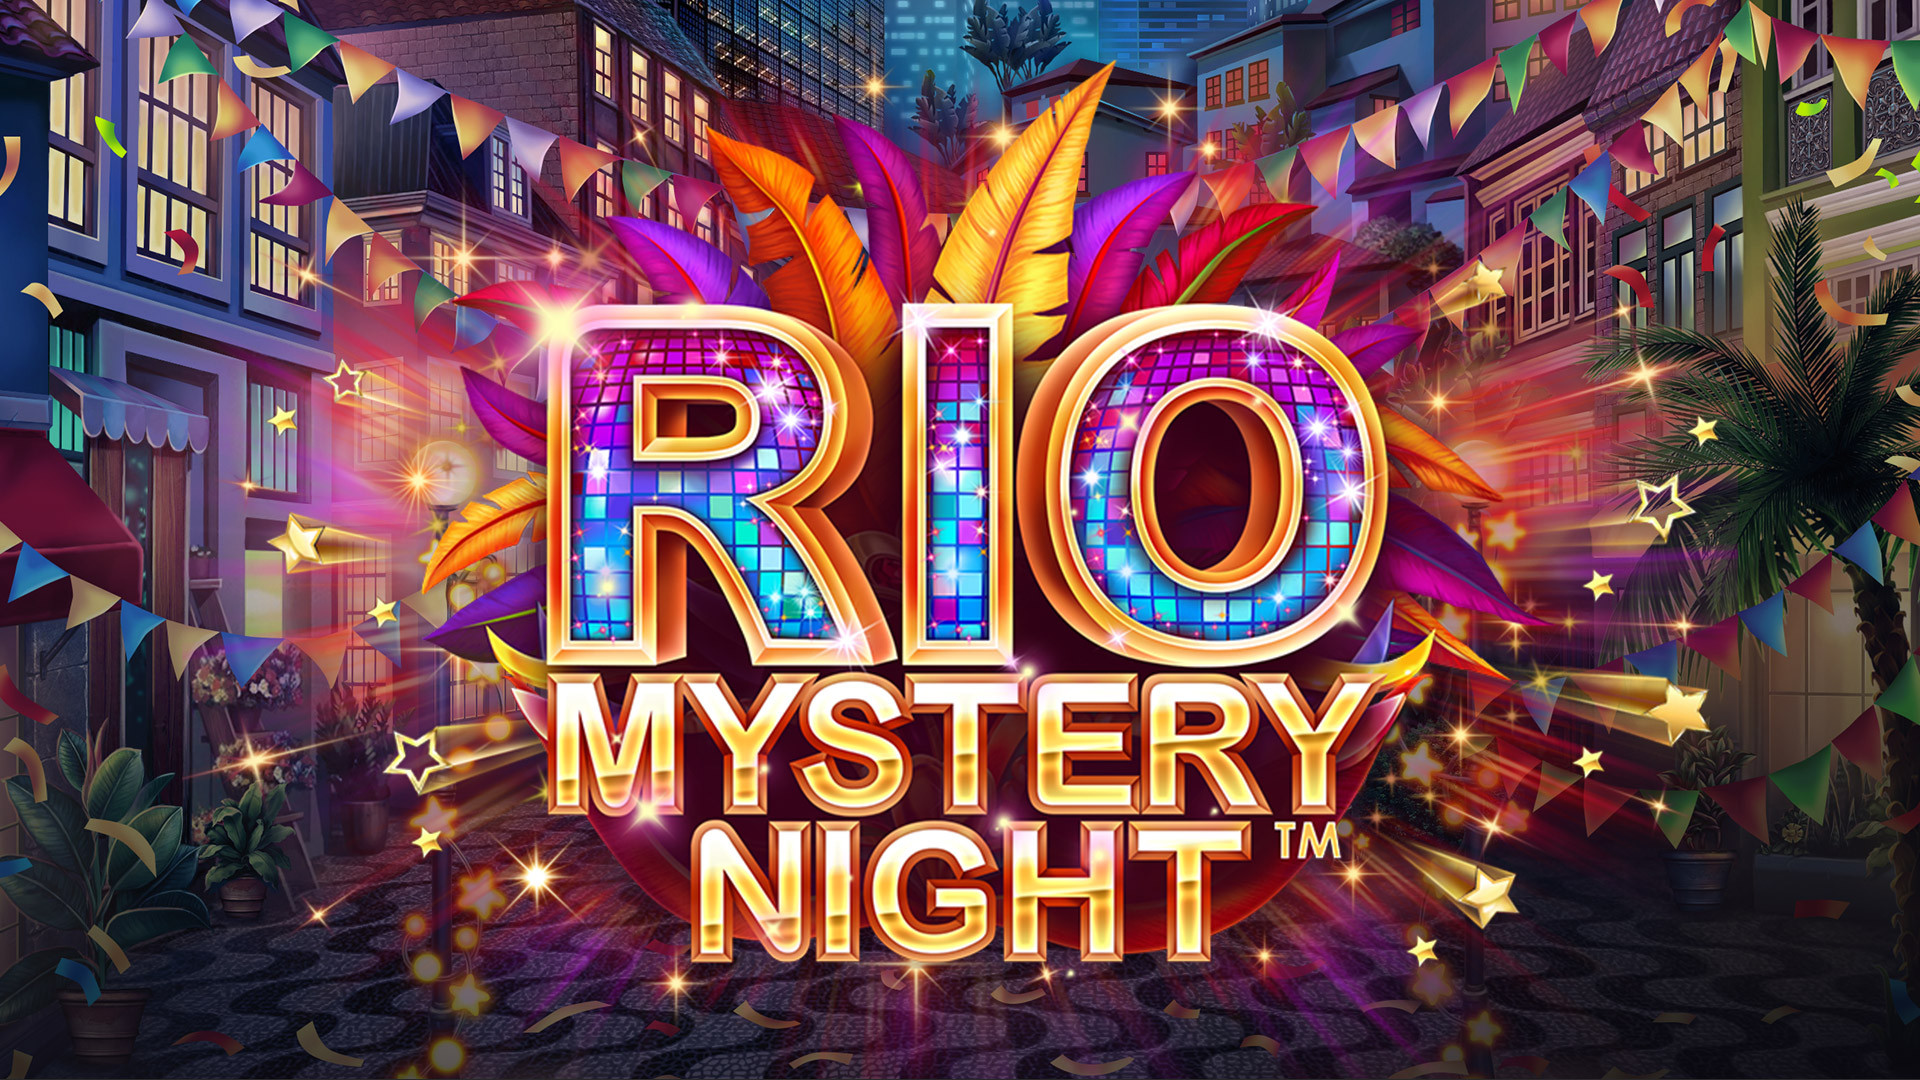 Rio Mystery Night